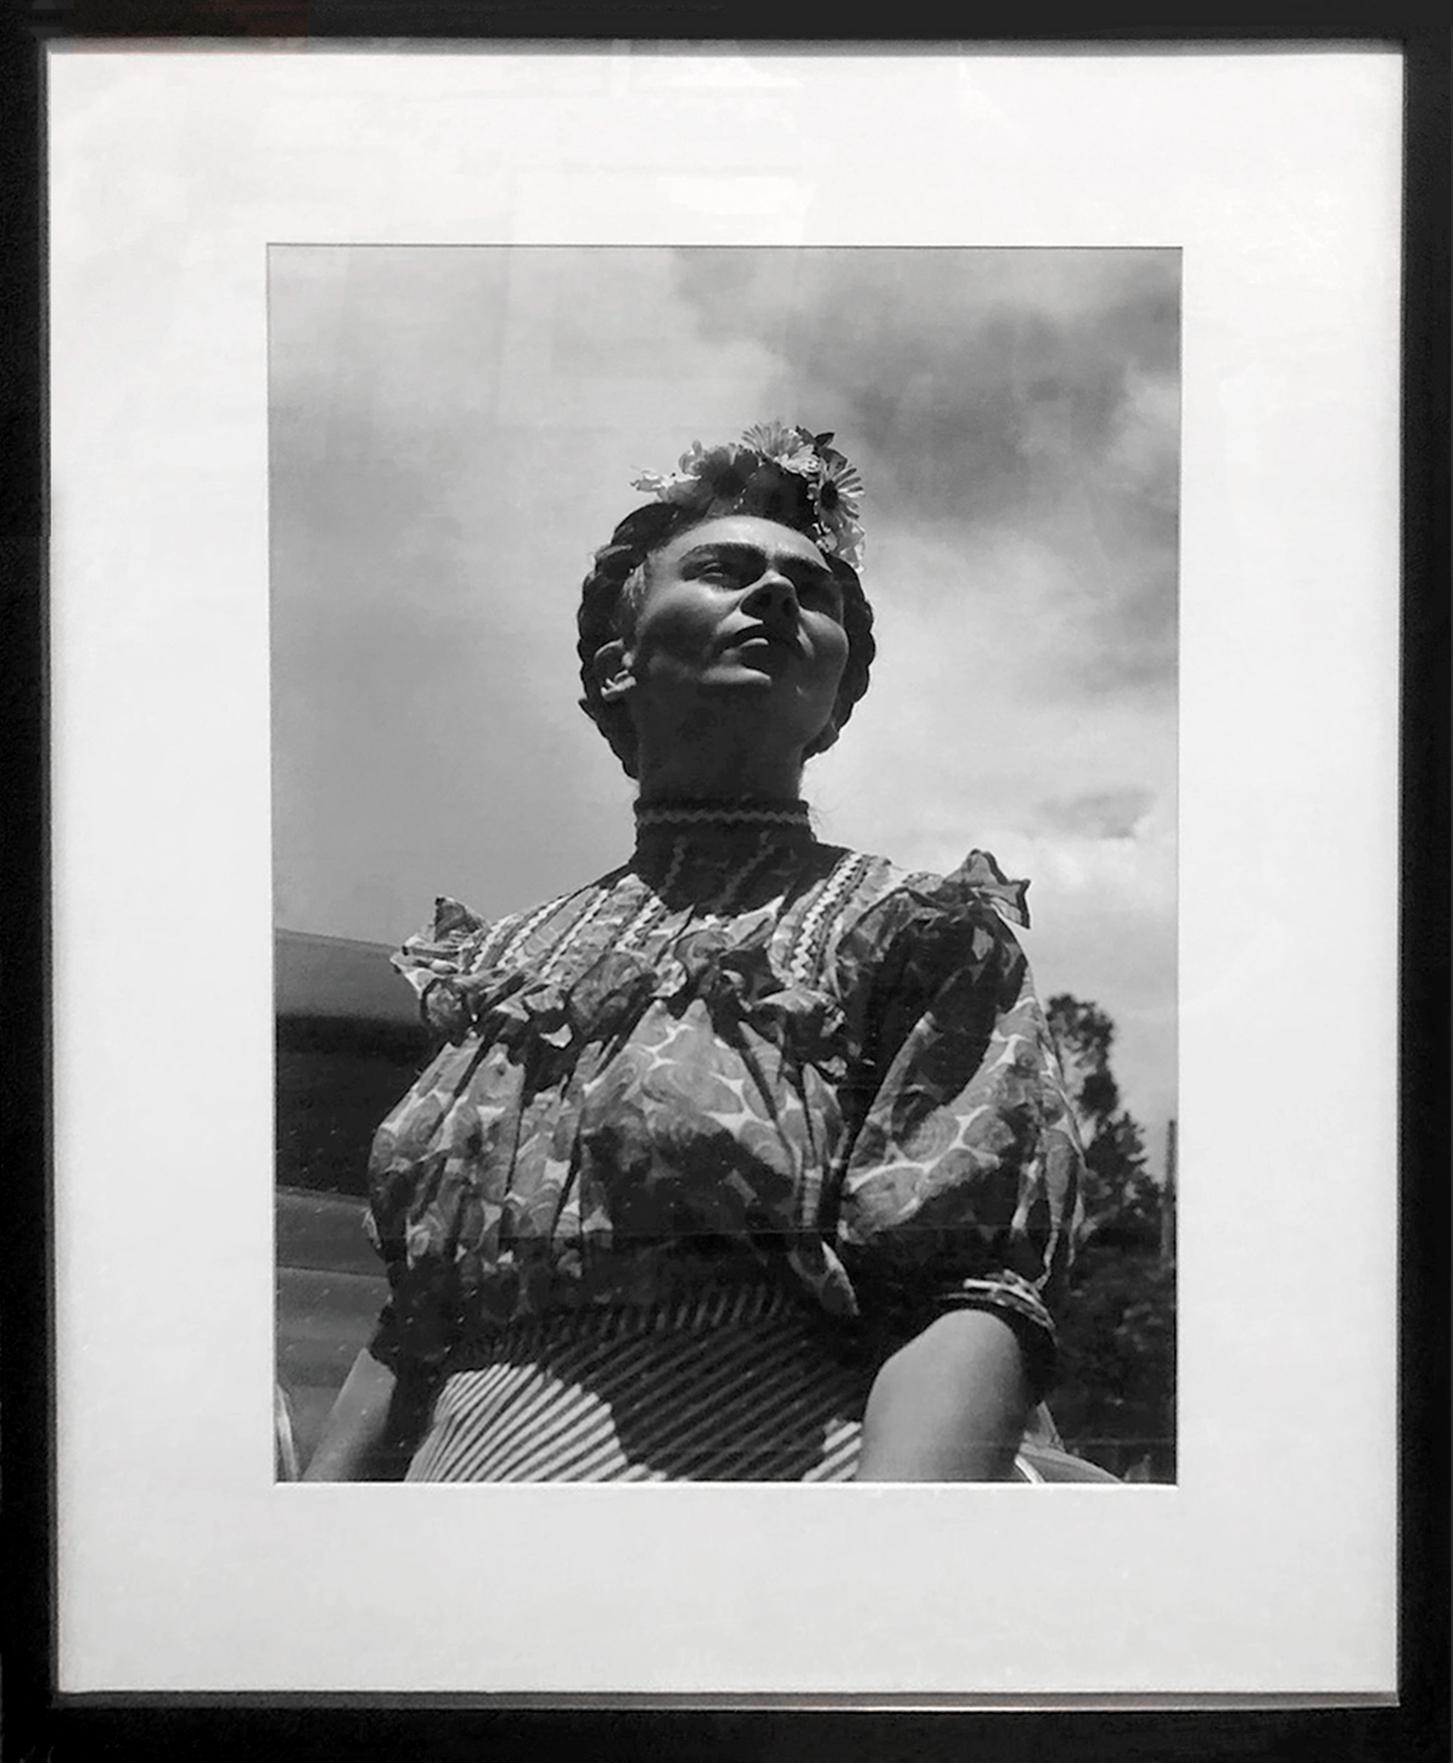 Frida Kahlo en Coyoacán, México VI. Black and white Portrait photograph. Framed - Photograph by Leo Matiz